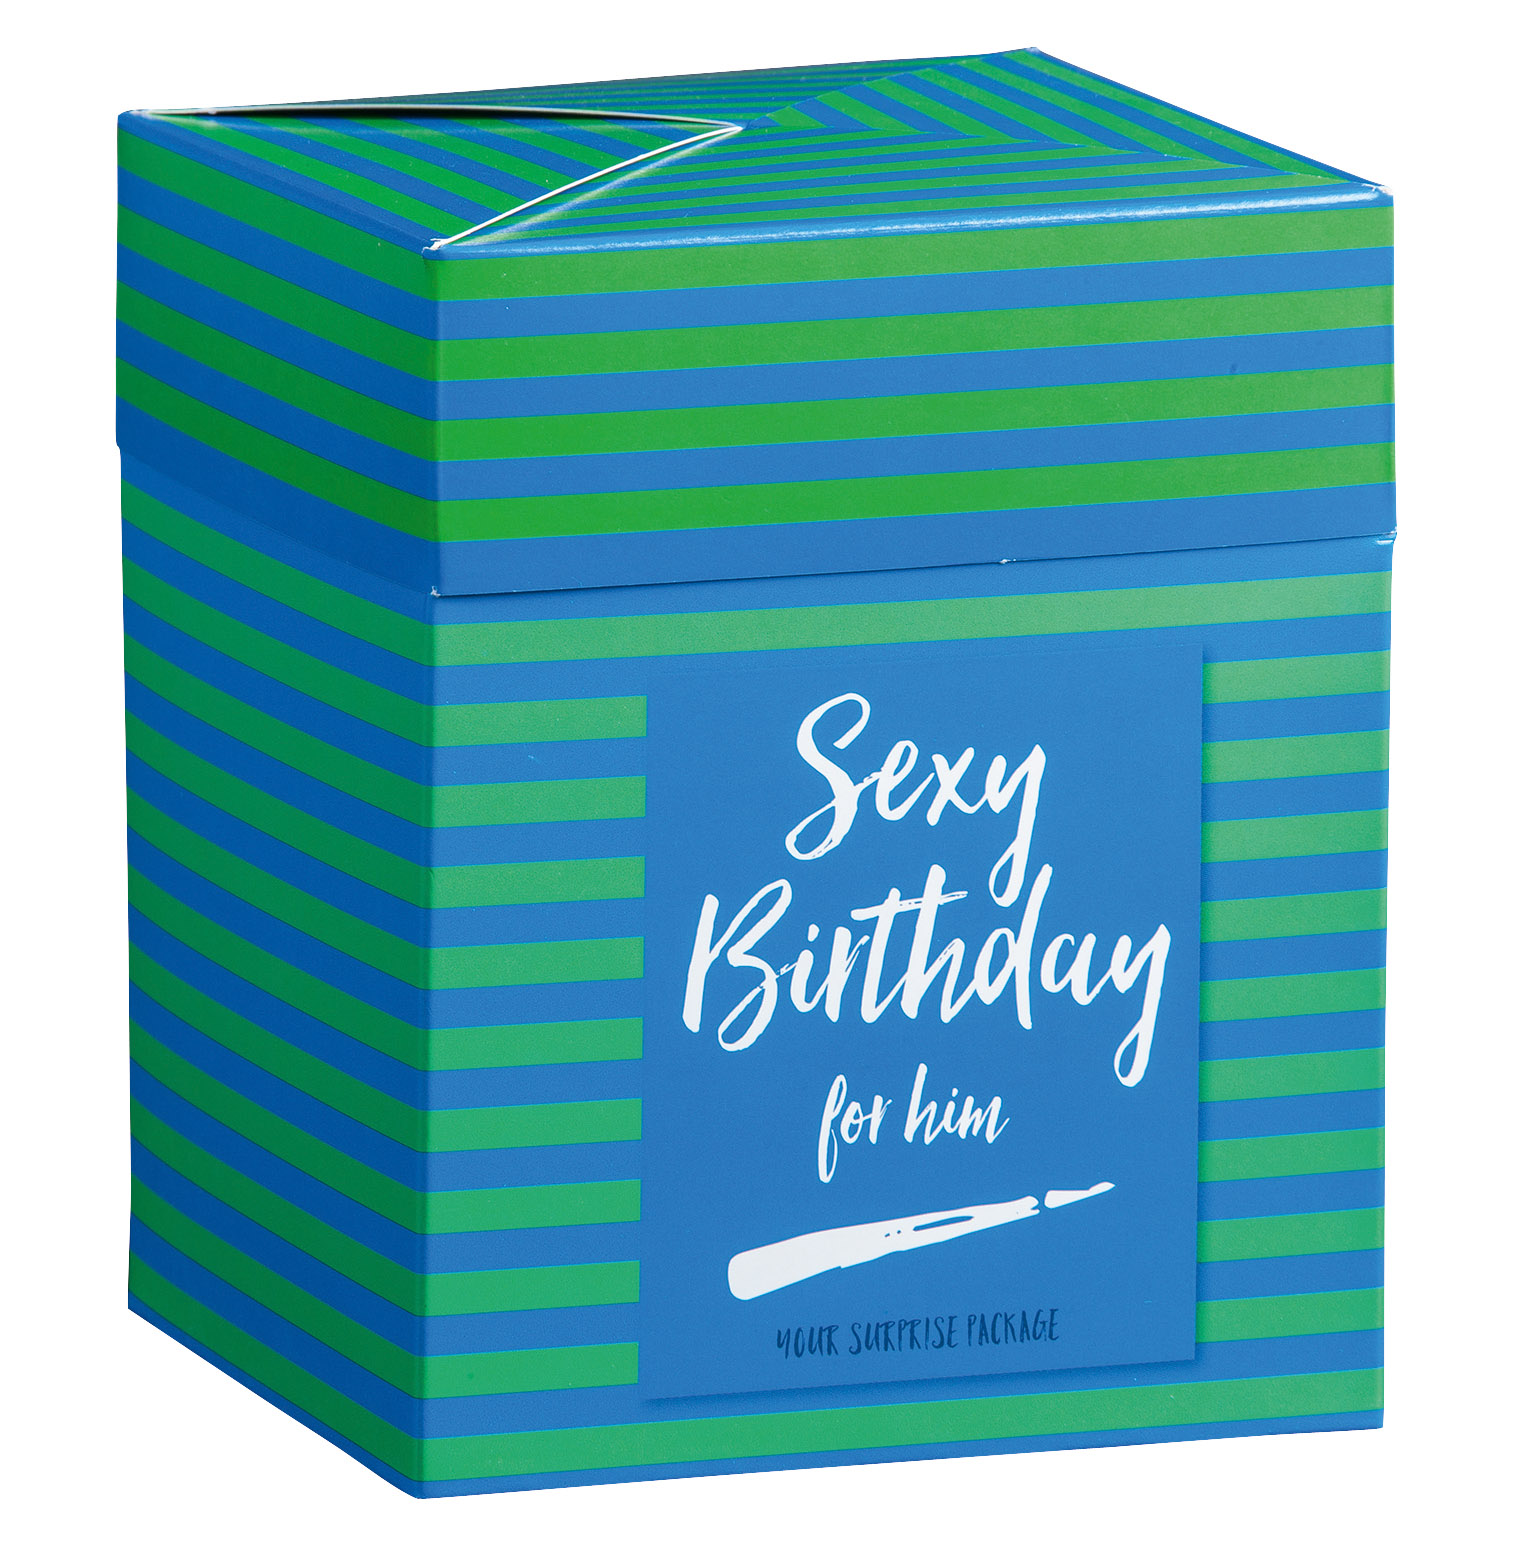 Box "Sexy Birthday Surprises For Him"